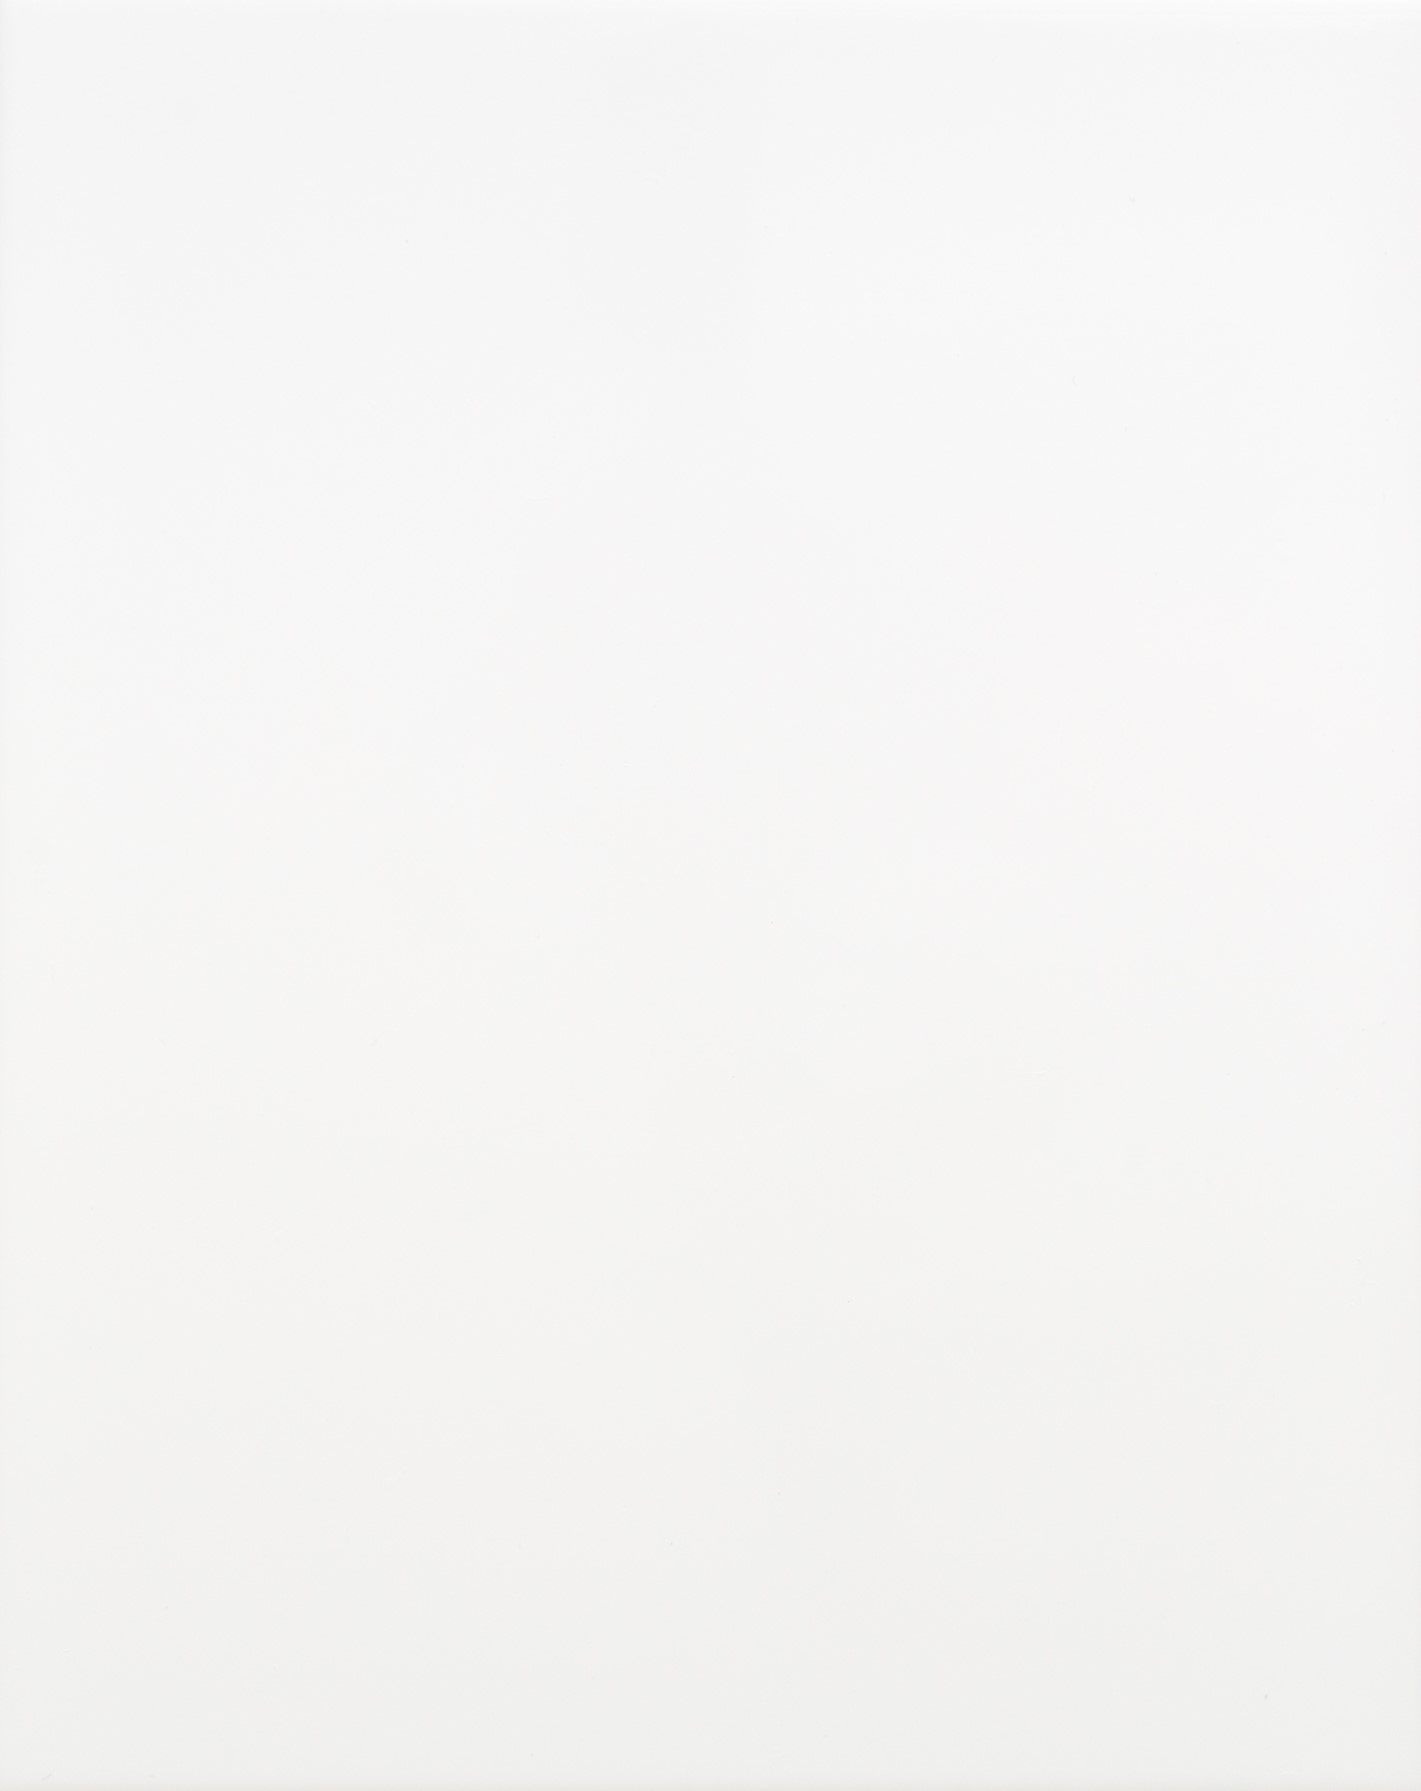 Centura Kale 8X10 inch Glossy Ceramic Wall Tile | Colour: White ( 20 PC